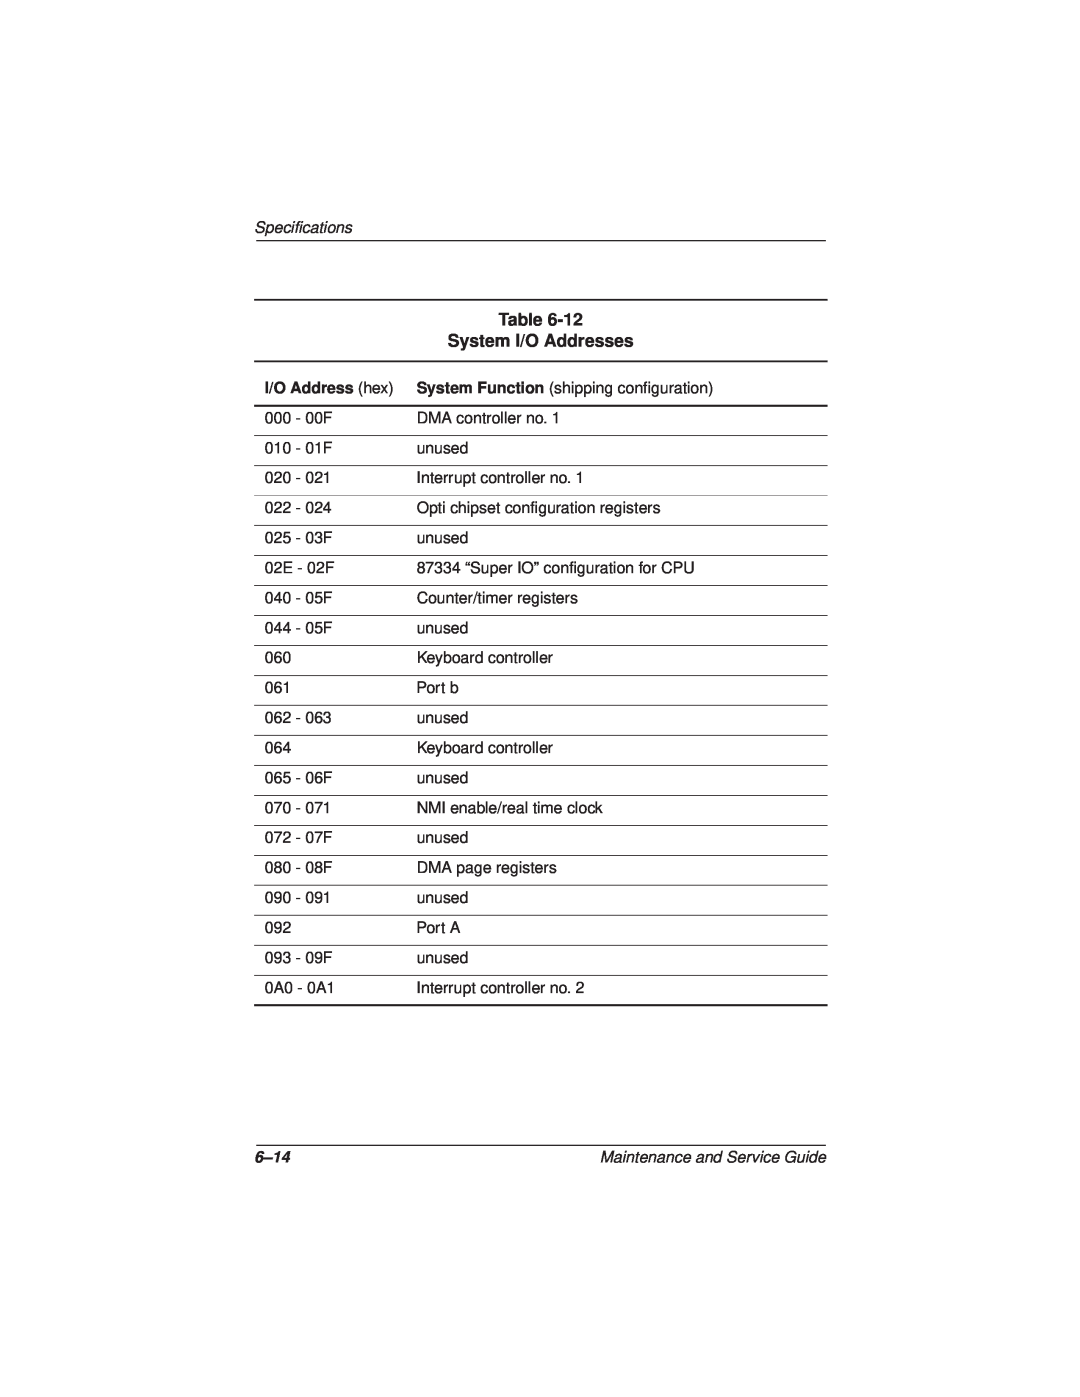 Compaq N110 manual System I/O Addresses, Specifications, 6-14 